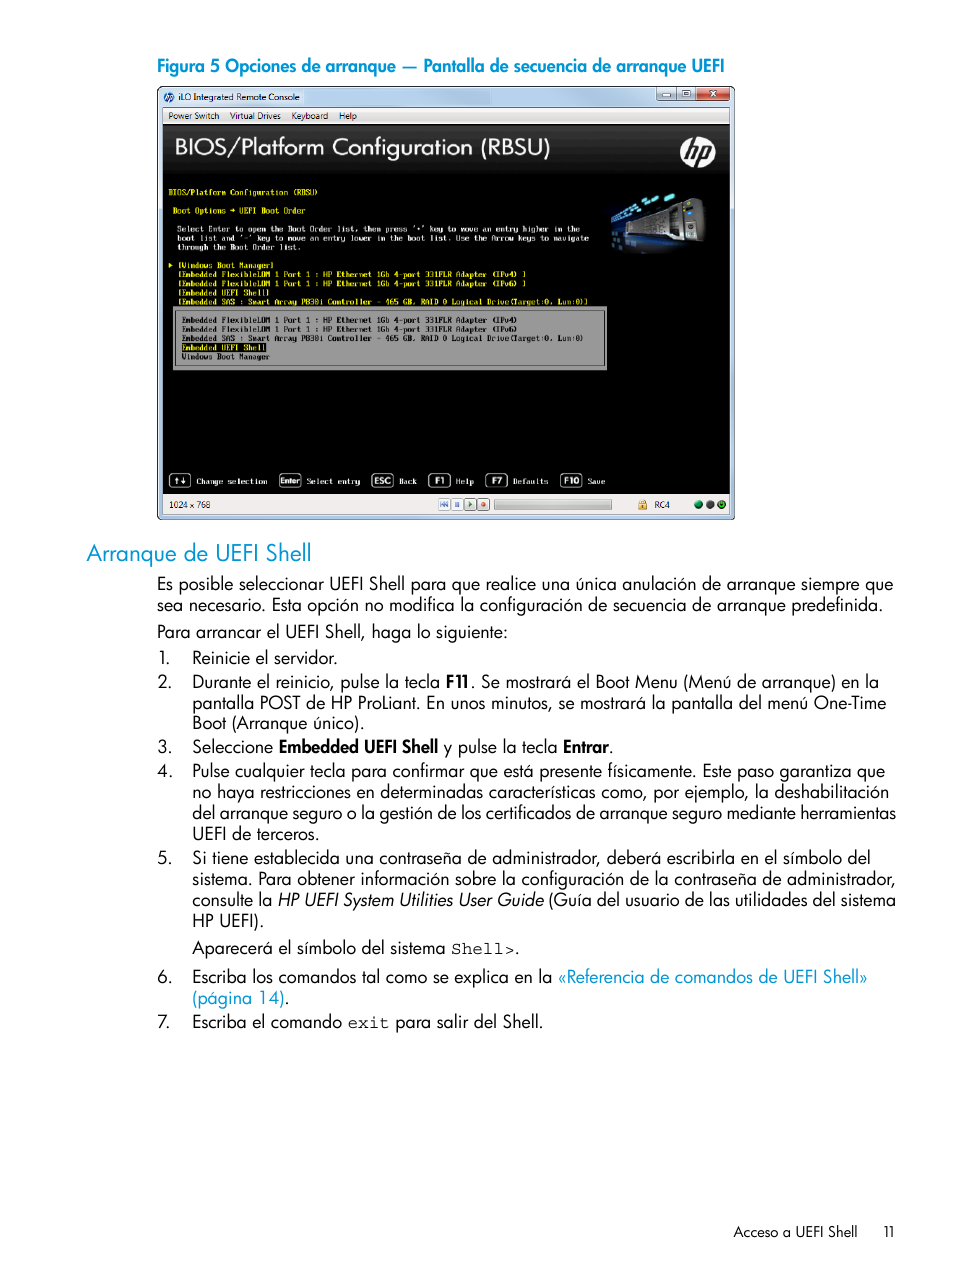 Arranque de uefi shell | HP UEFI Manual del usuario | Página 11 / 81